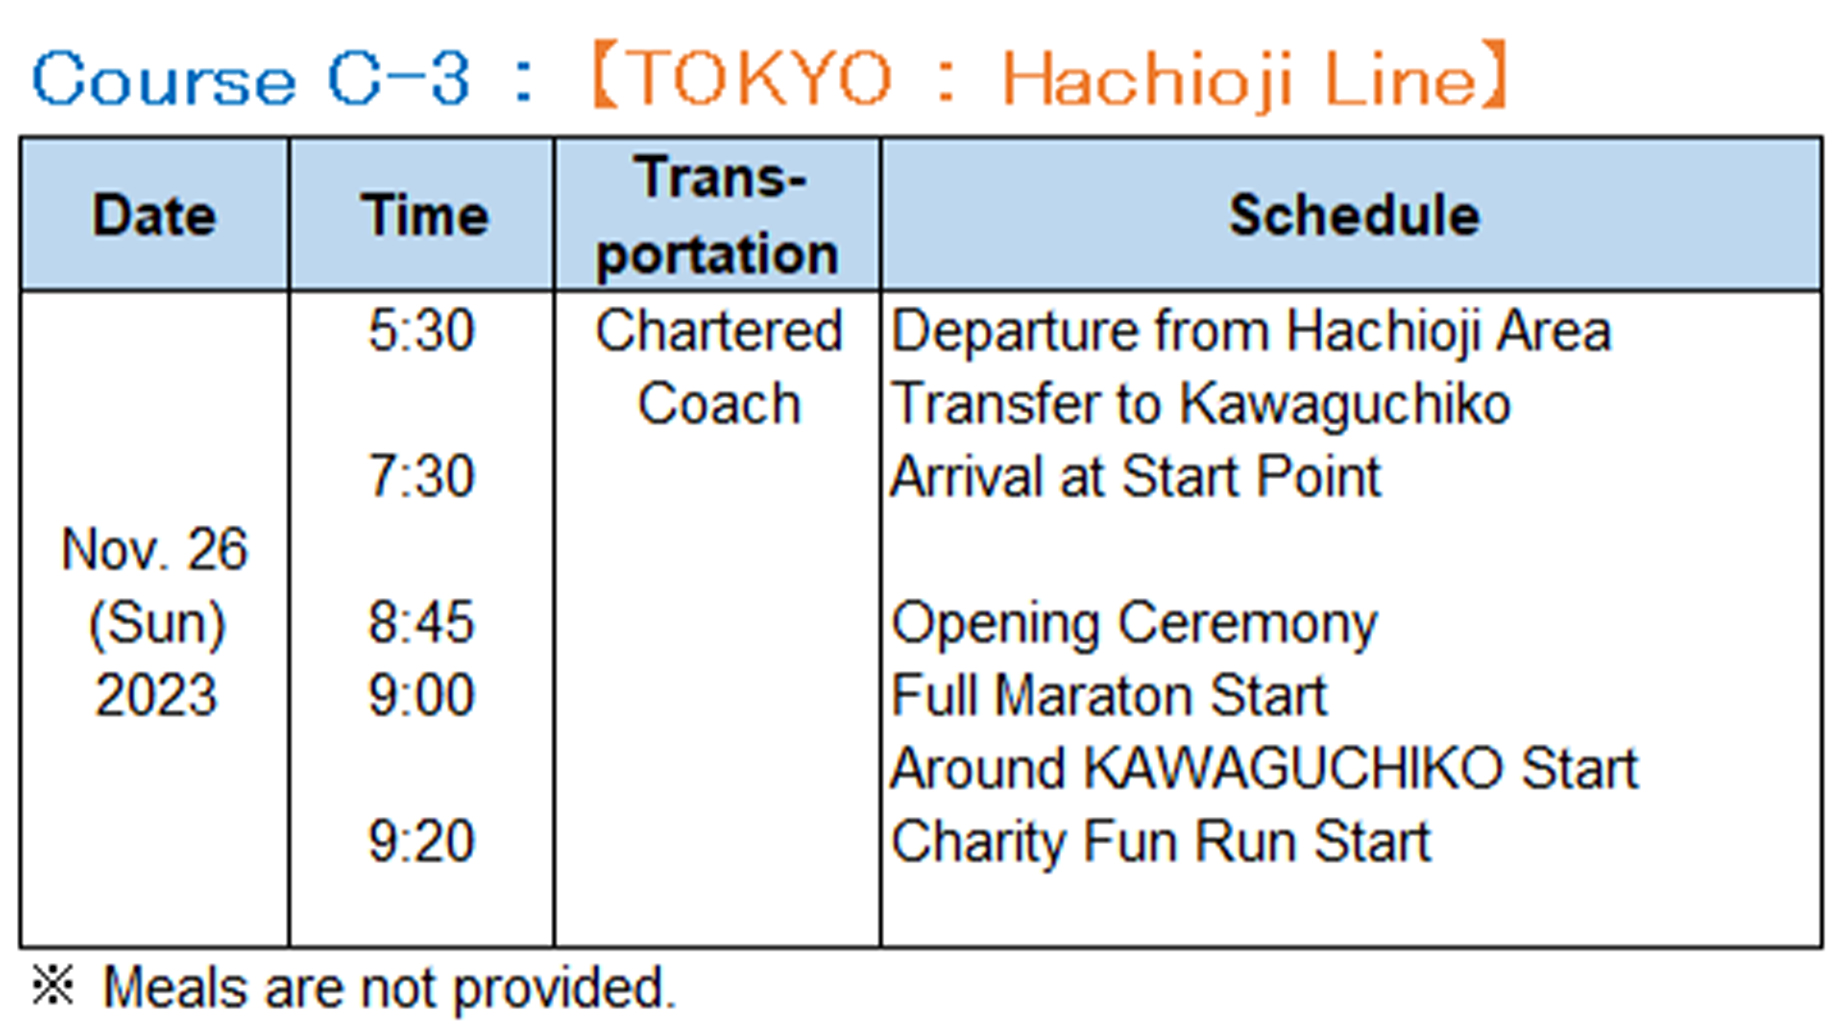 Course C-3:  [TOKYO - Hachiouji Line]